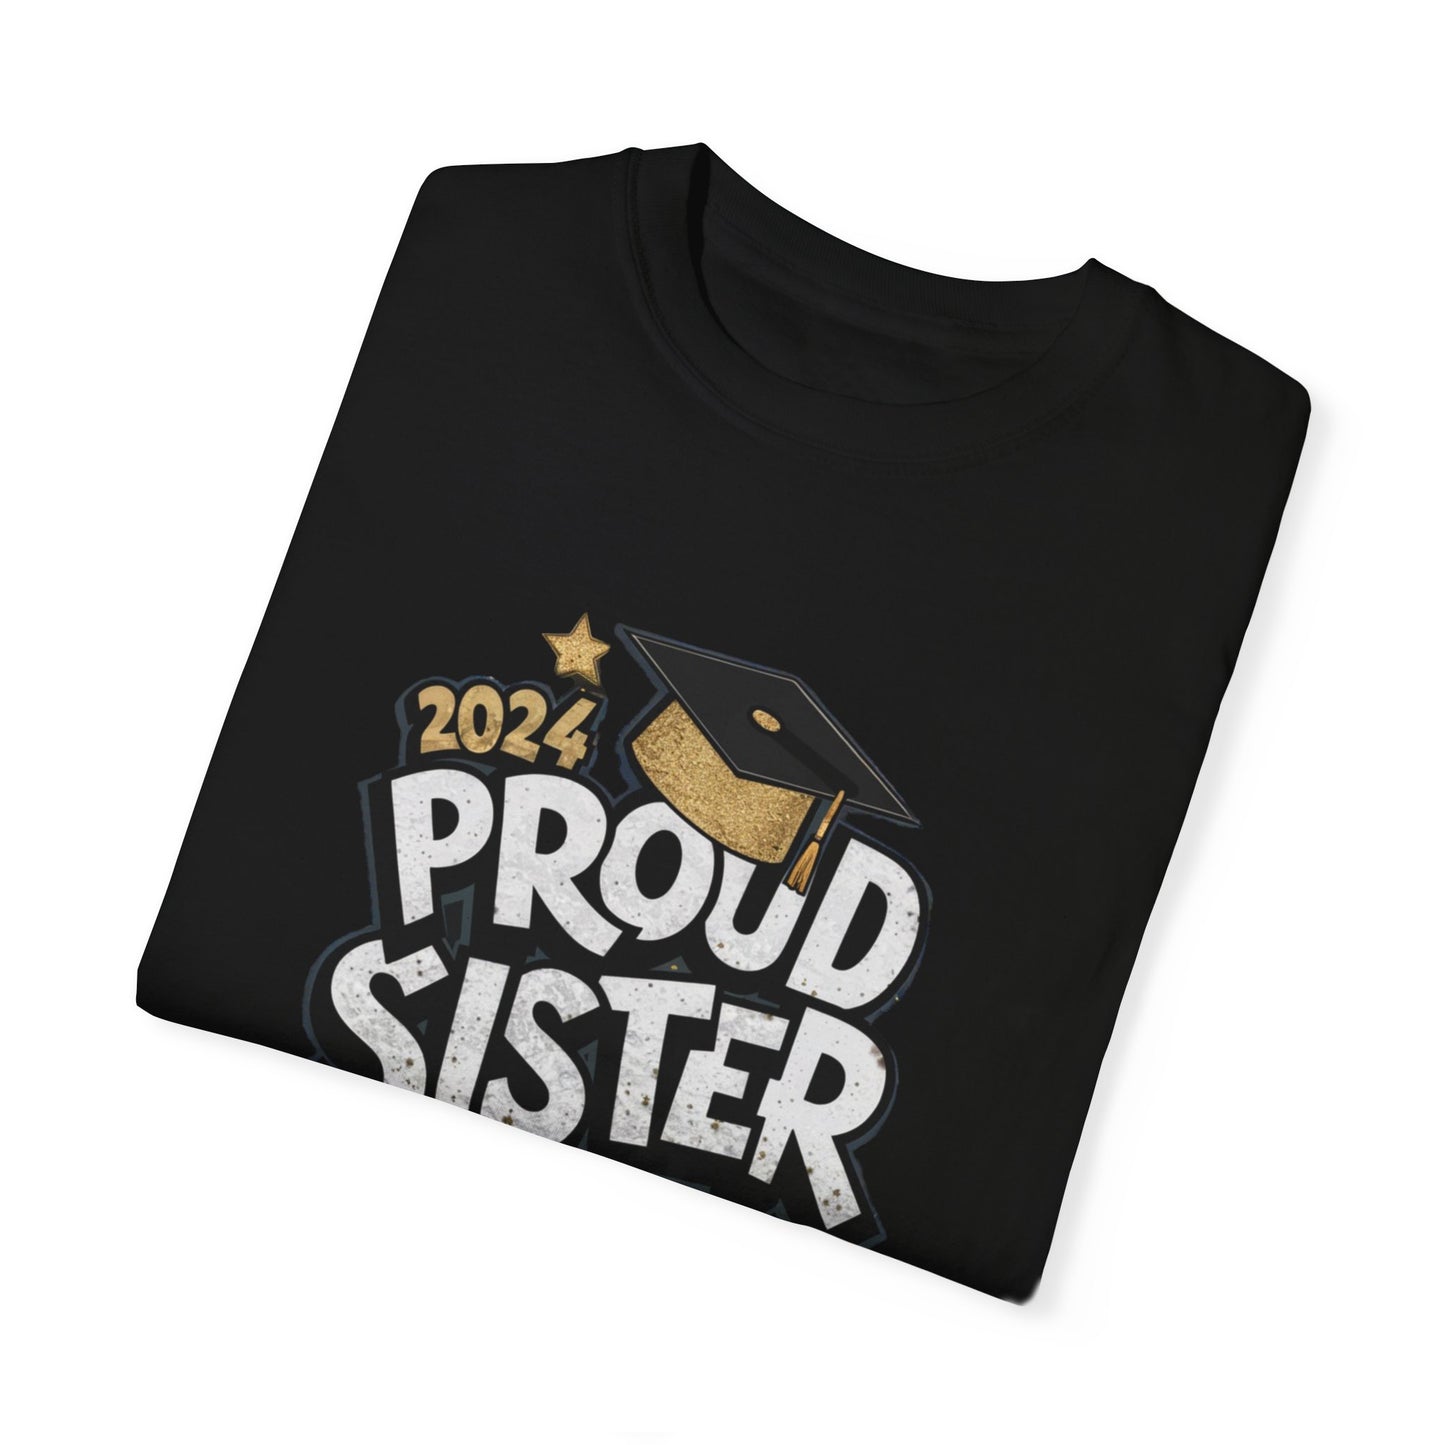 Proud Sister of a 2024 Graduate Unisex Garment-dyed T-shirt Cotton Funny Humorous Graphic Soft Premium Unisex Men Women Black T-shirt Birthday Gift-17